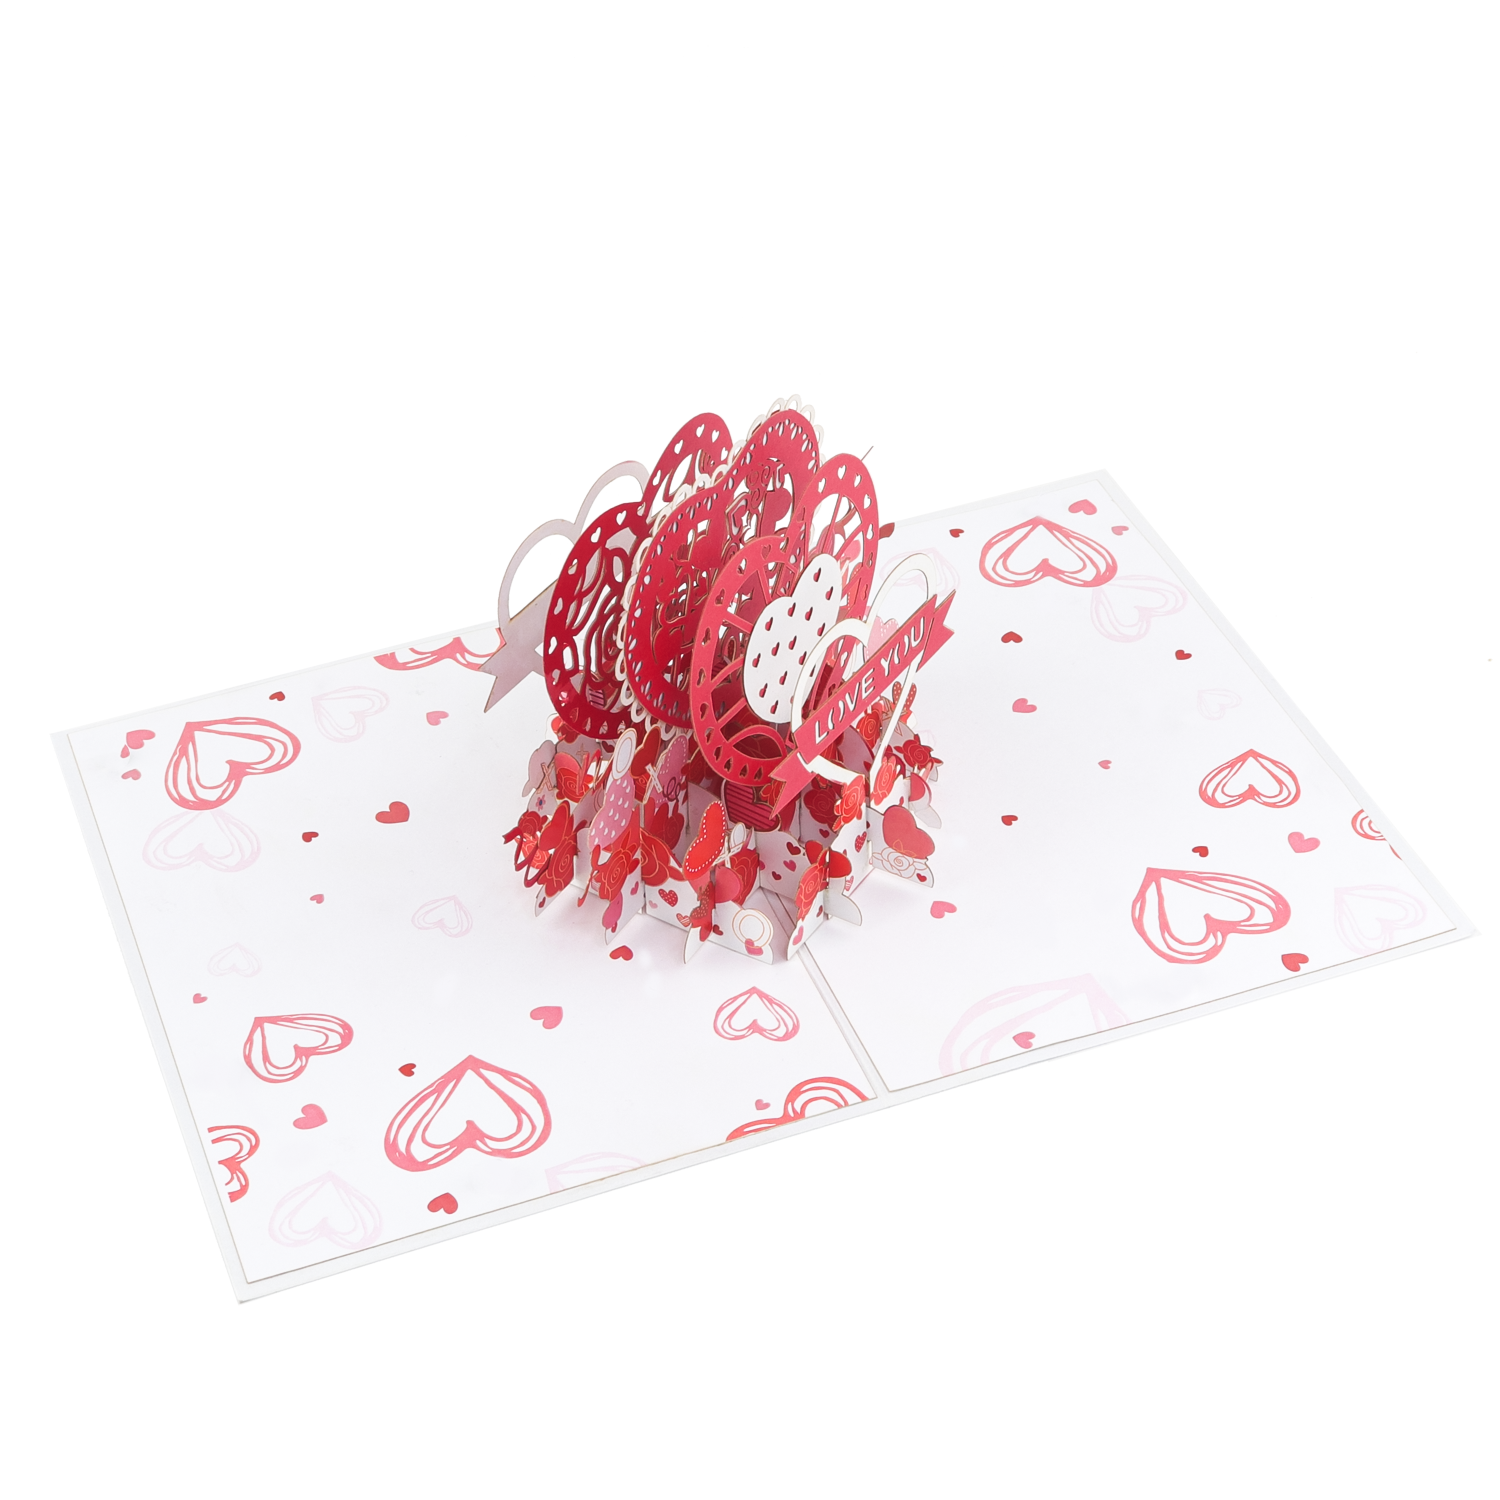 Love-Heart-Pop-Up-Card-LV65-overview-pop-up-card-wholesale-manufacturer-valentines-day-pop-up-card-flower-pop-up-card-teddy-3d-pop-up-greeting-card-10.png